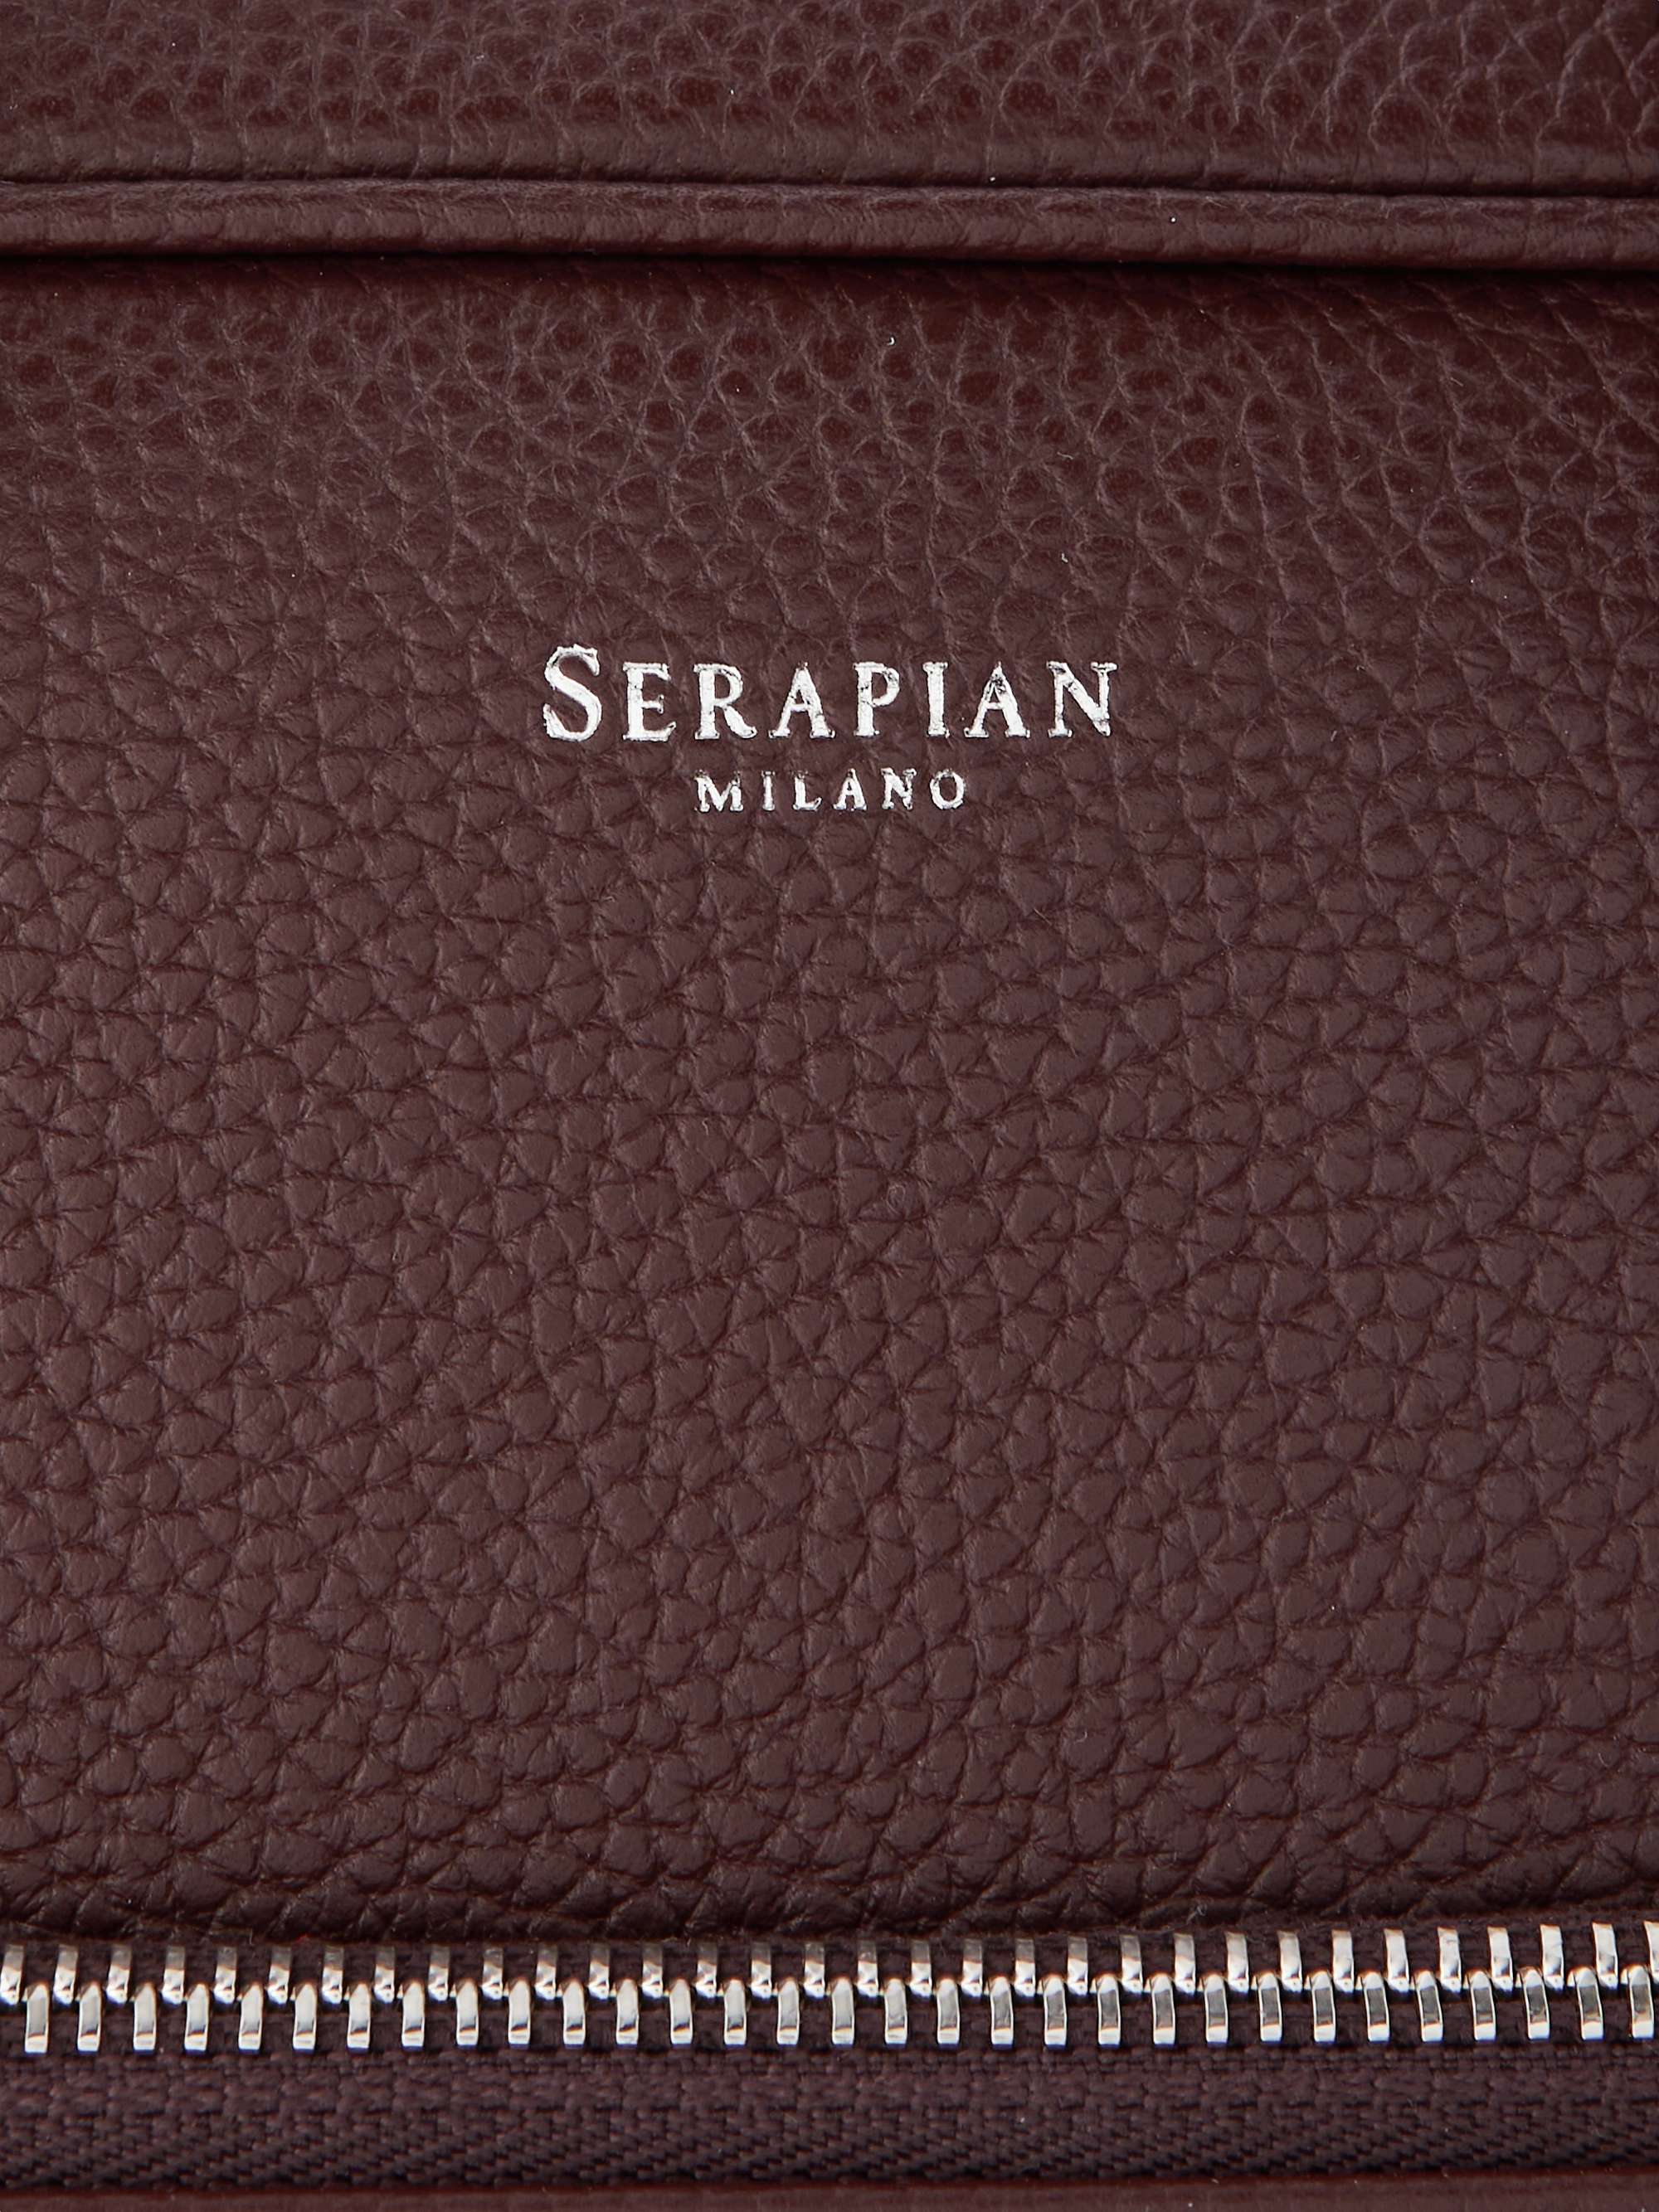 SERAPIAN Cachemire Leather Briefcase